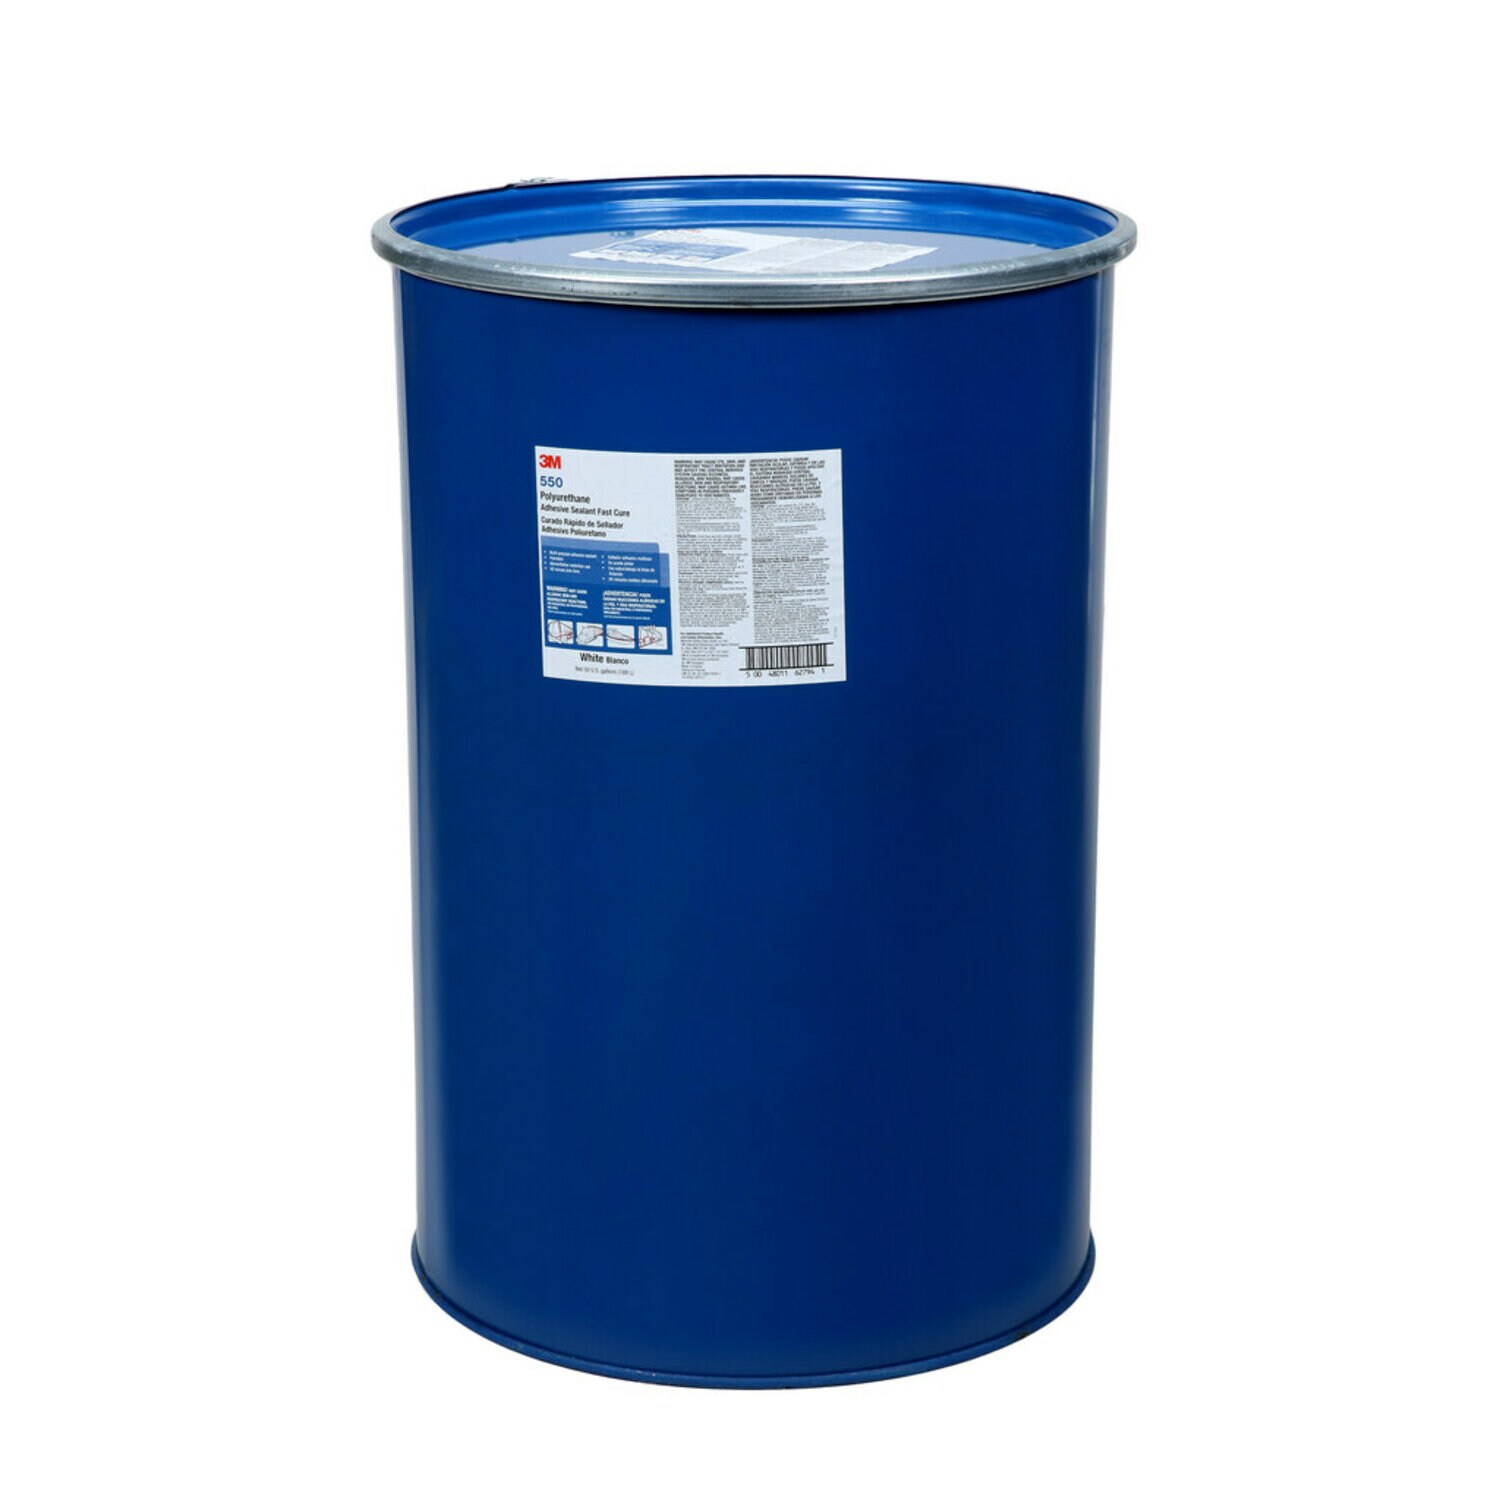 7100200227 - "3M Polyurethane Adhesive Sealant 550FC, Fast Cure, White, 55 Gallon
Open
Head (50 Gallon Net), Drum"